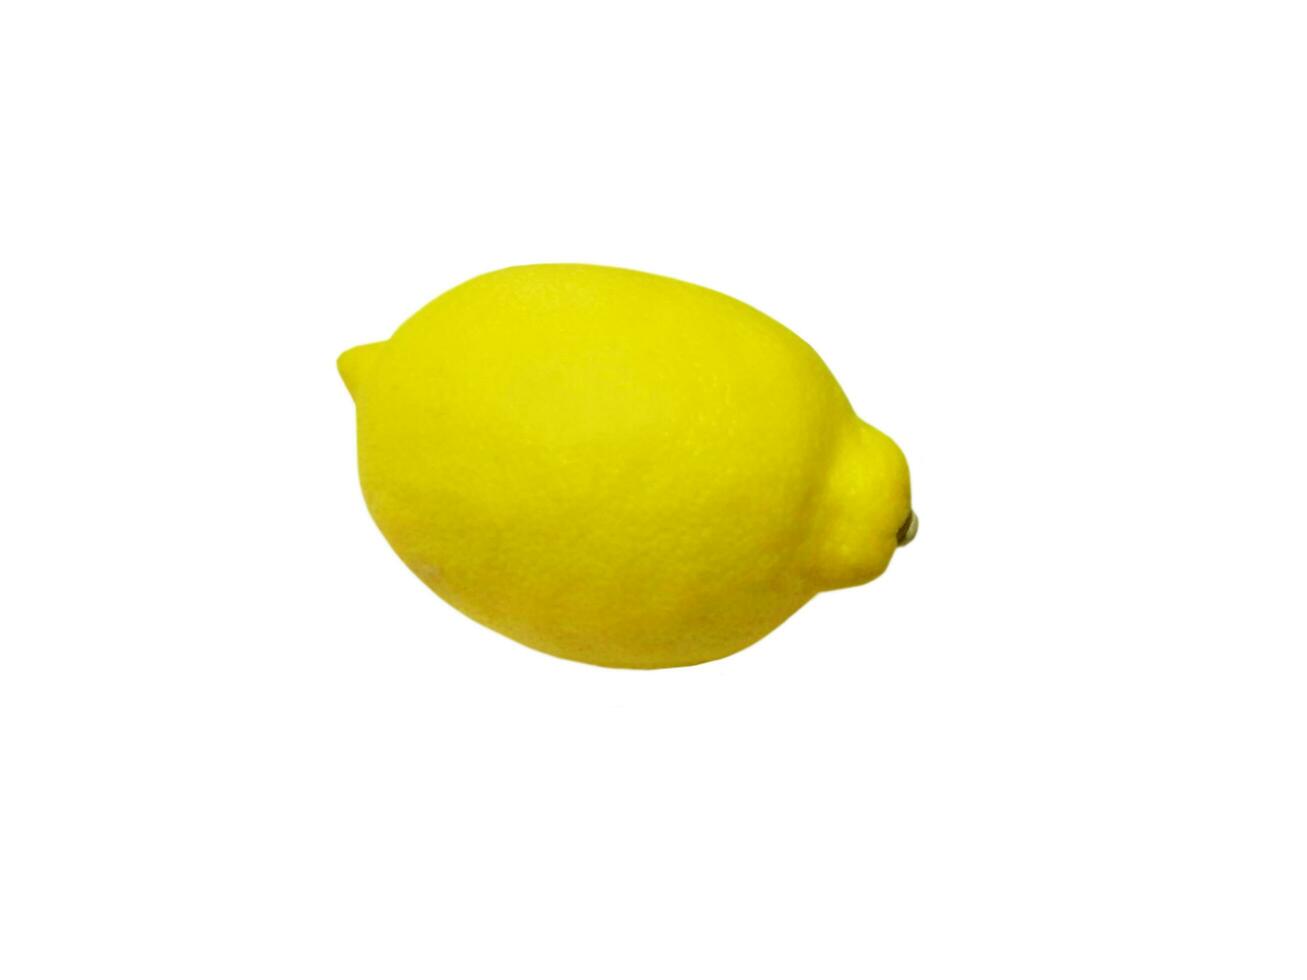 Ripe sour lemon on a white background photo